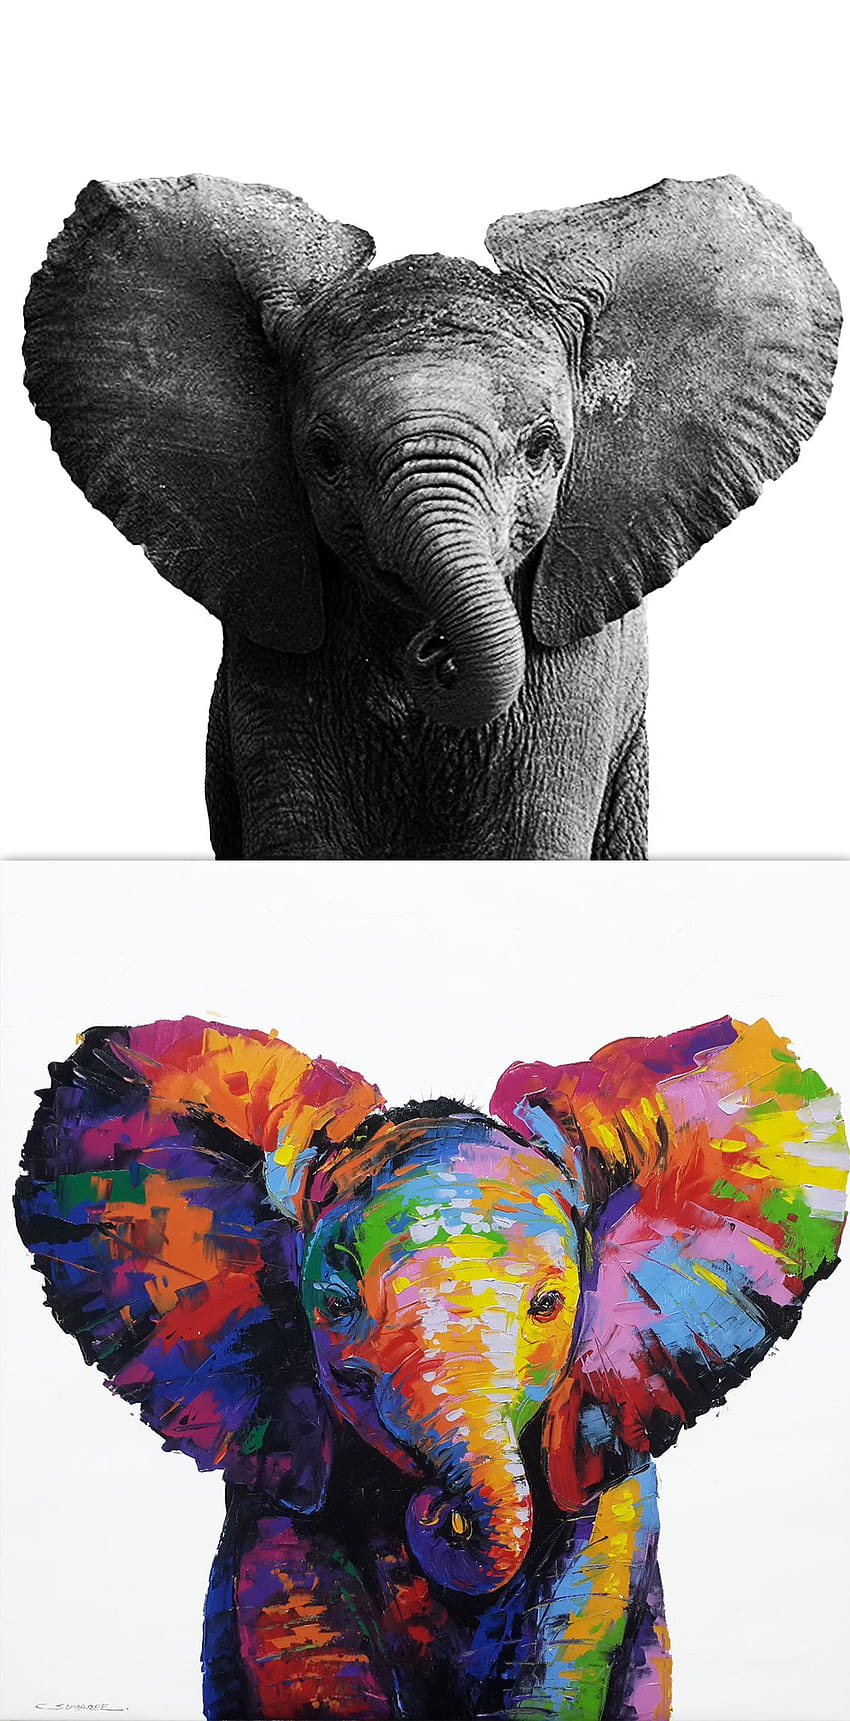 Arte hermoso del elefante de SumareeART. Arte de elefante, arte de retratos de animales, tatuaje de arte de elefante, arte de elefante colorido fondo de pantalla del teléfono